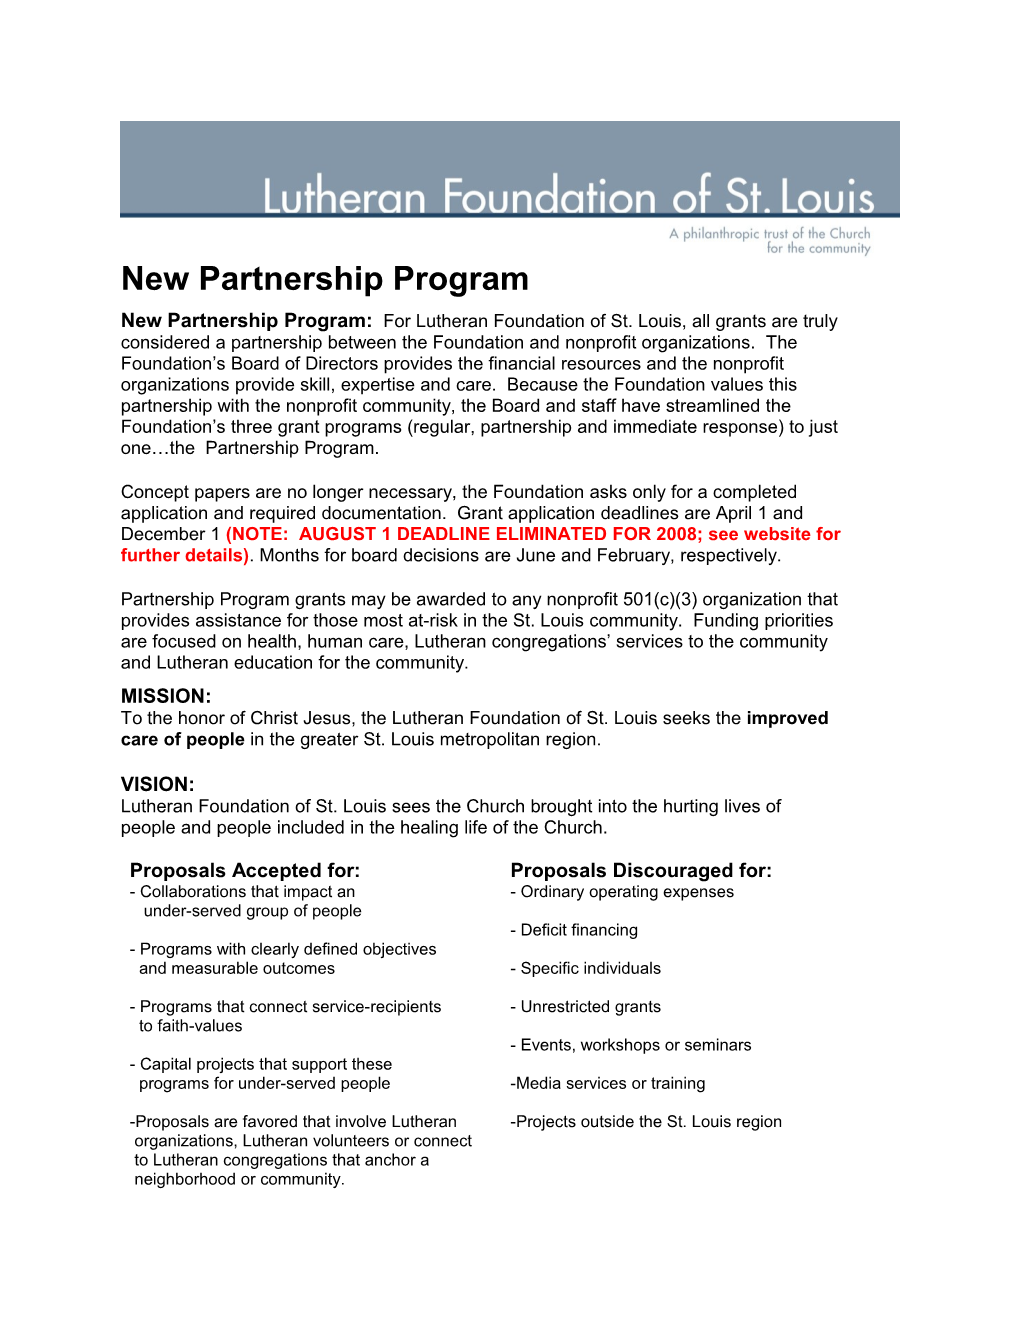 New Partnership Program